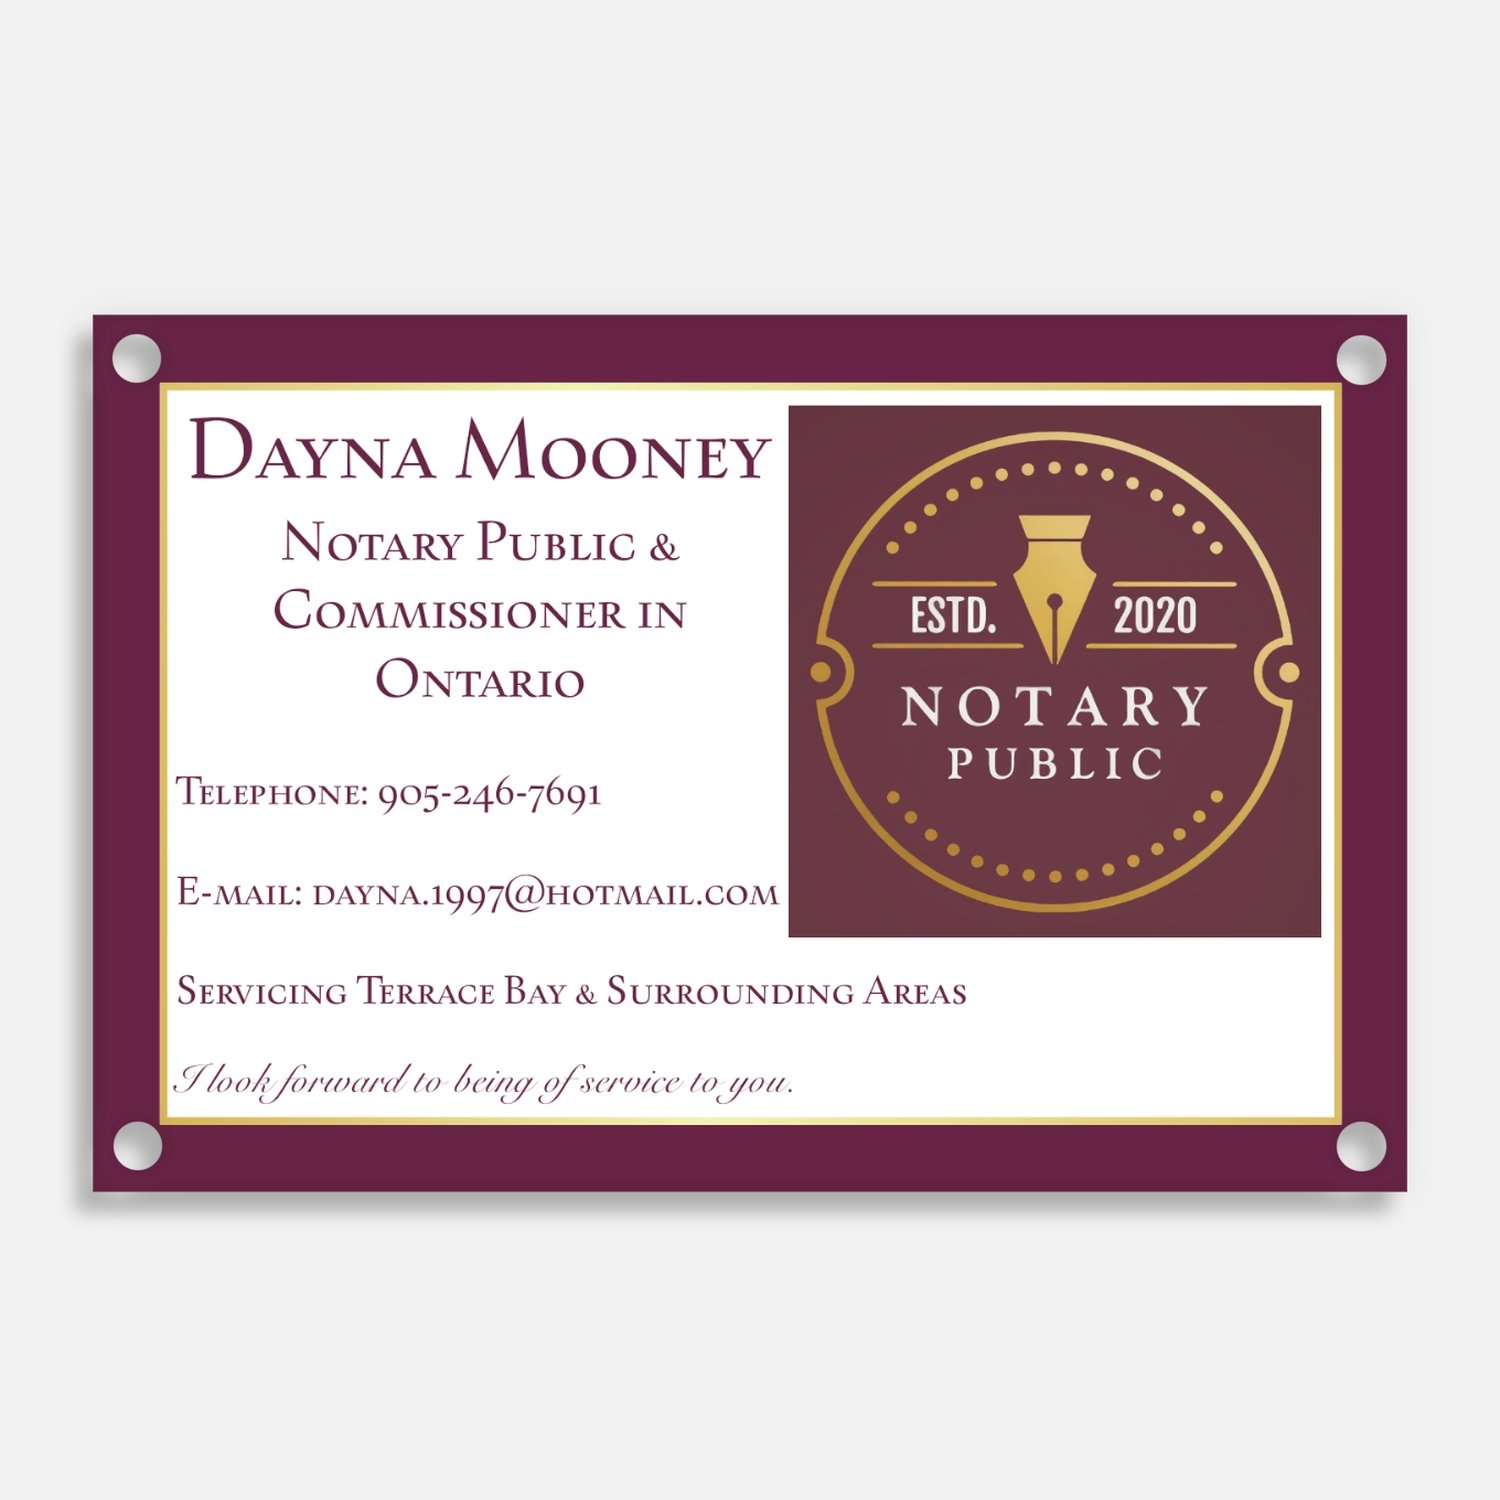 Notary Services - Dayna Mooney Poplar Crescent, Terrace Bay Ontario P0T 2W0